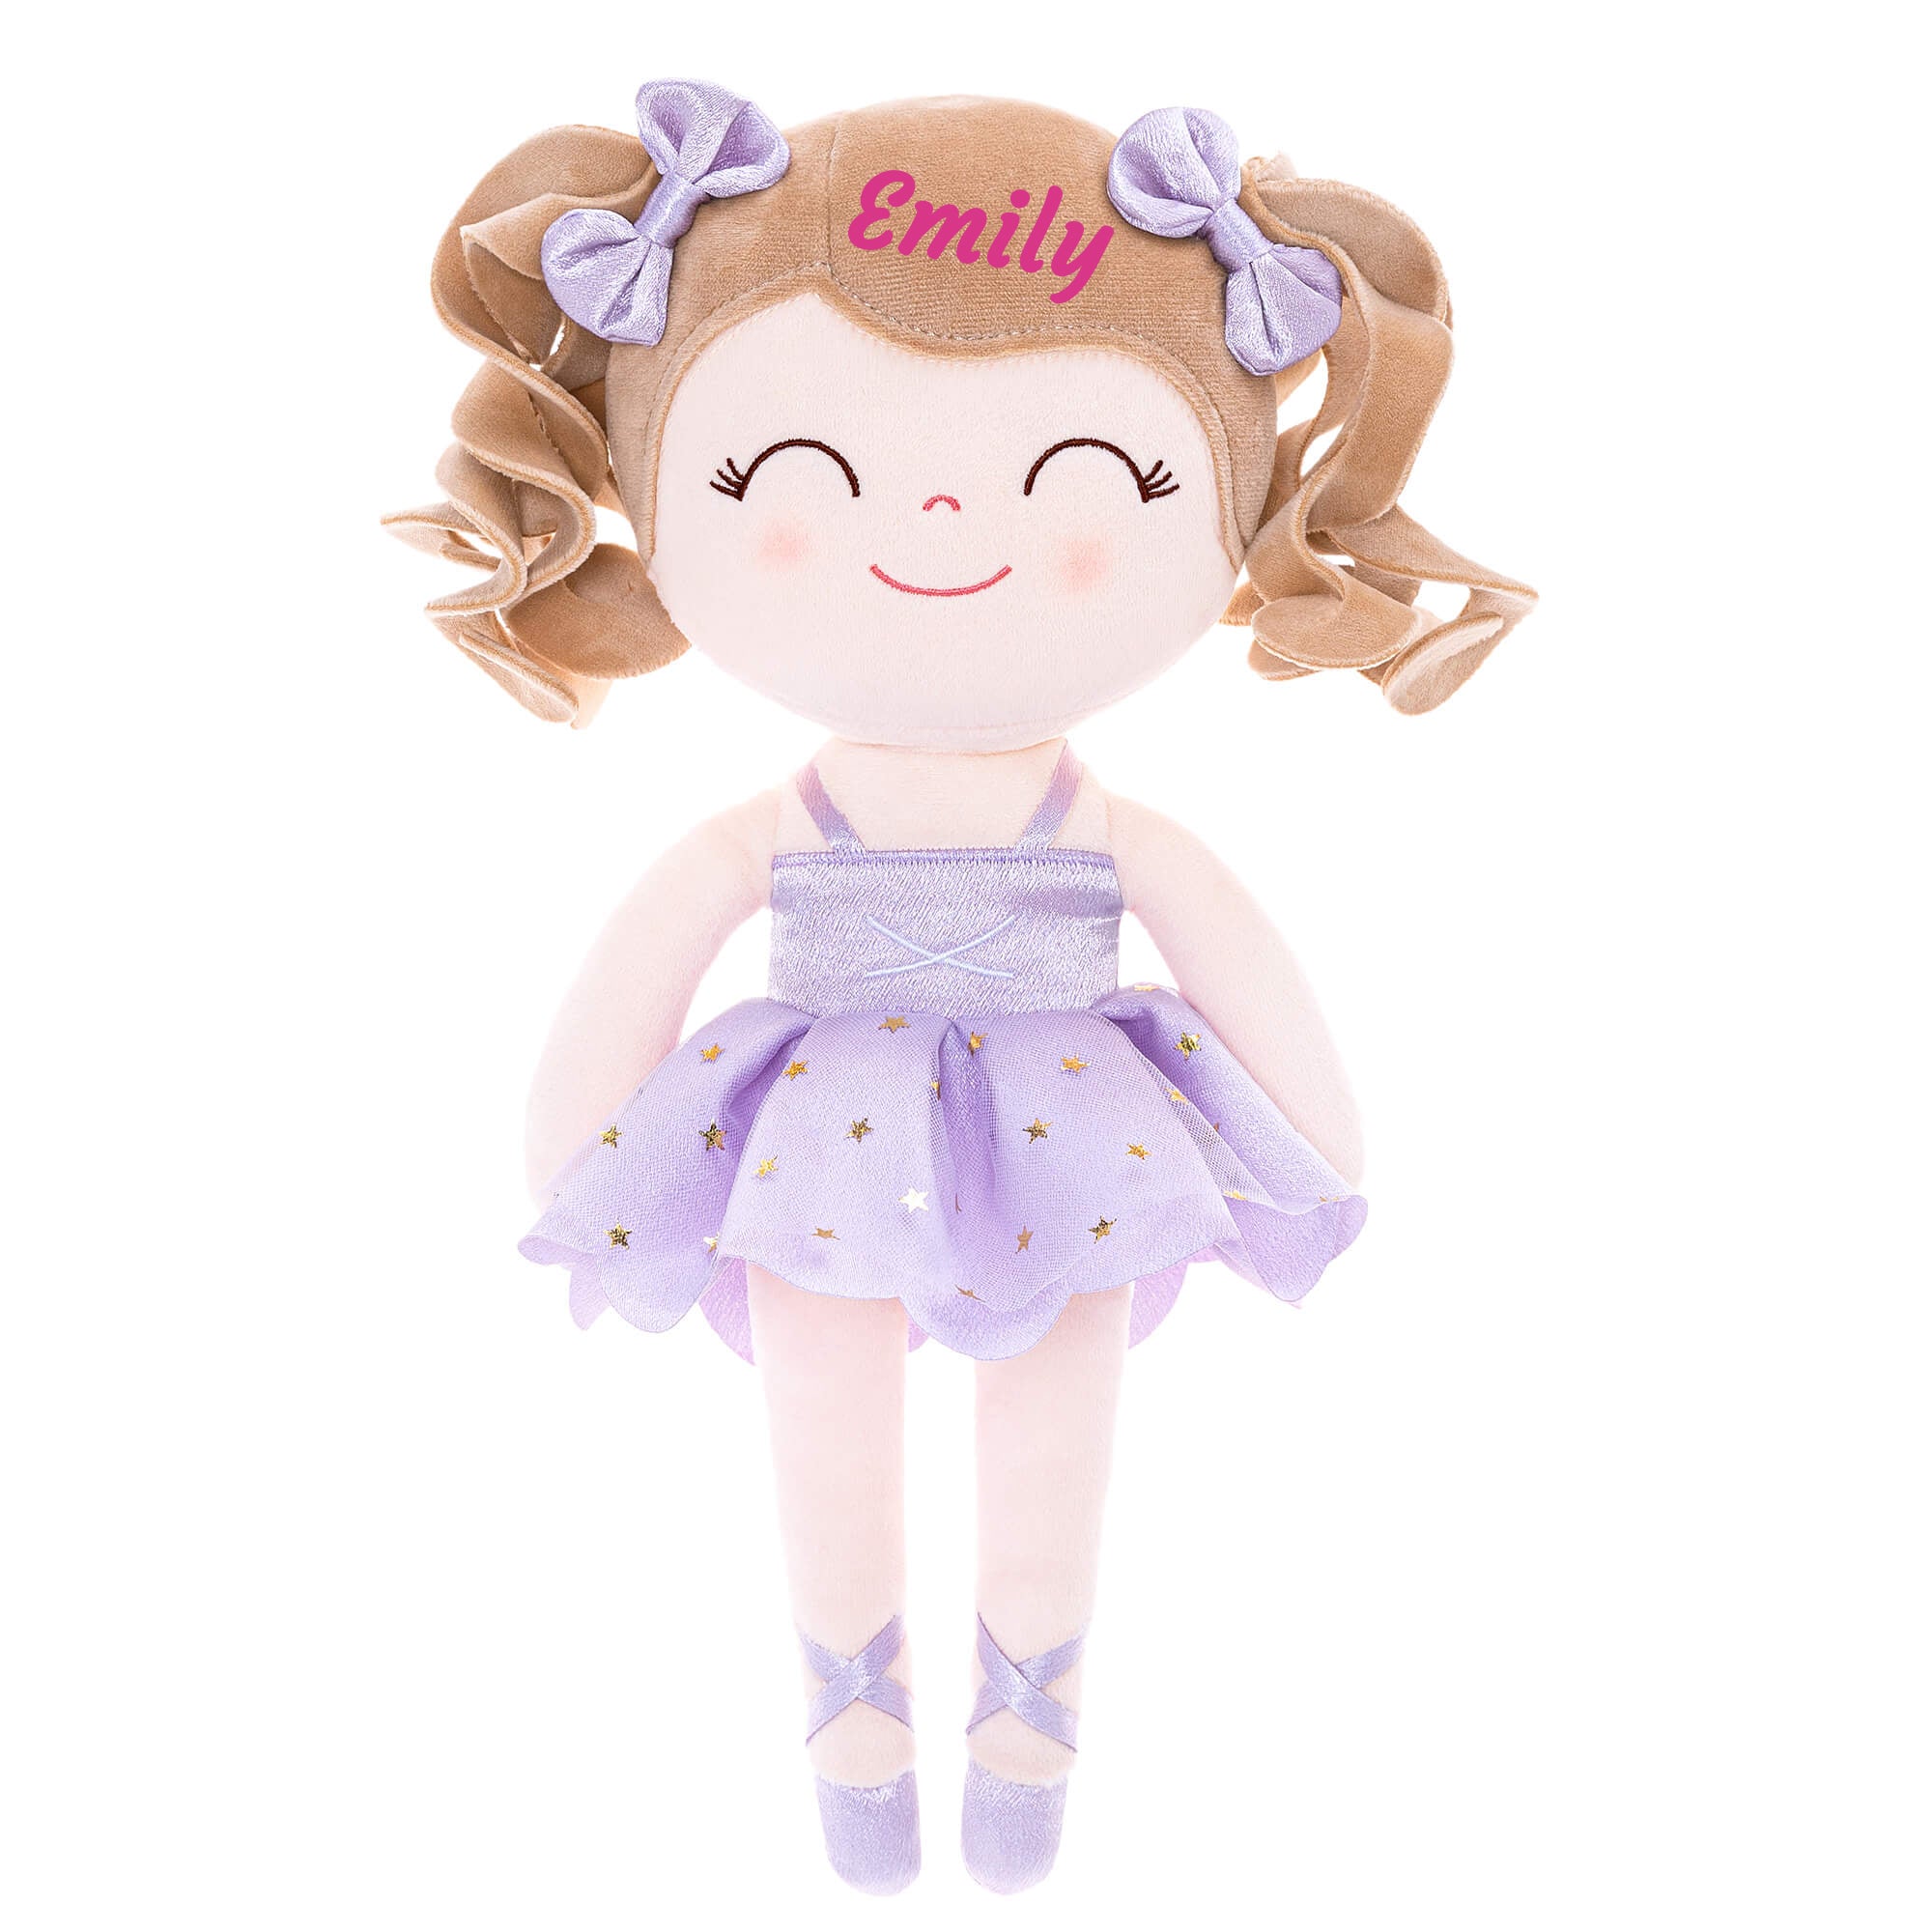 Gloveleya 14-inch Personalized Plush Dolls Curly Ballerina Series Purple Ballet Dream